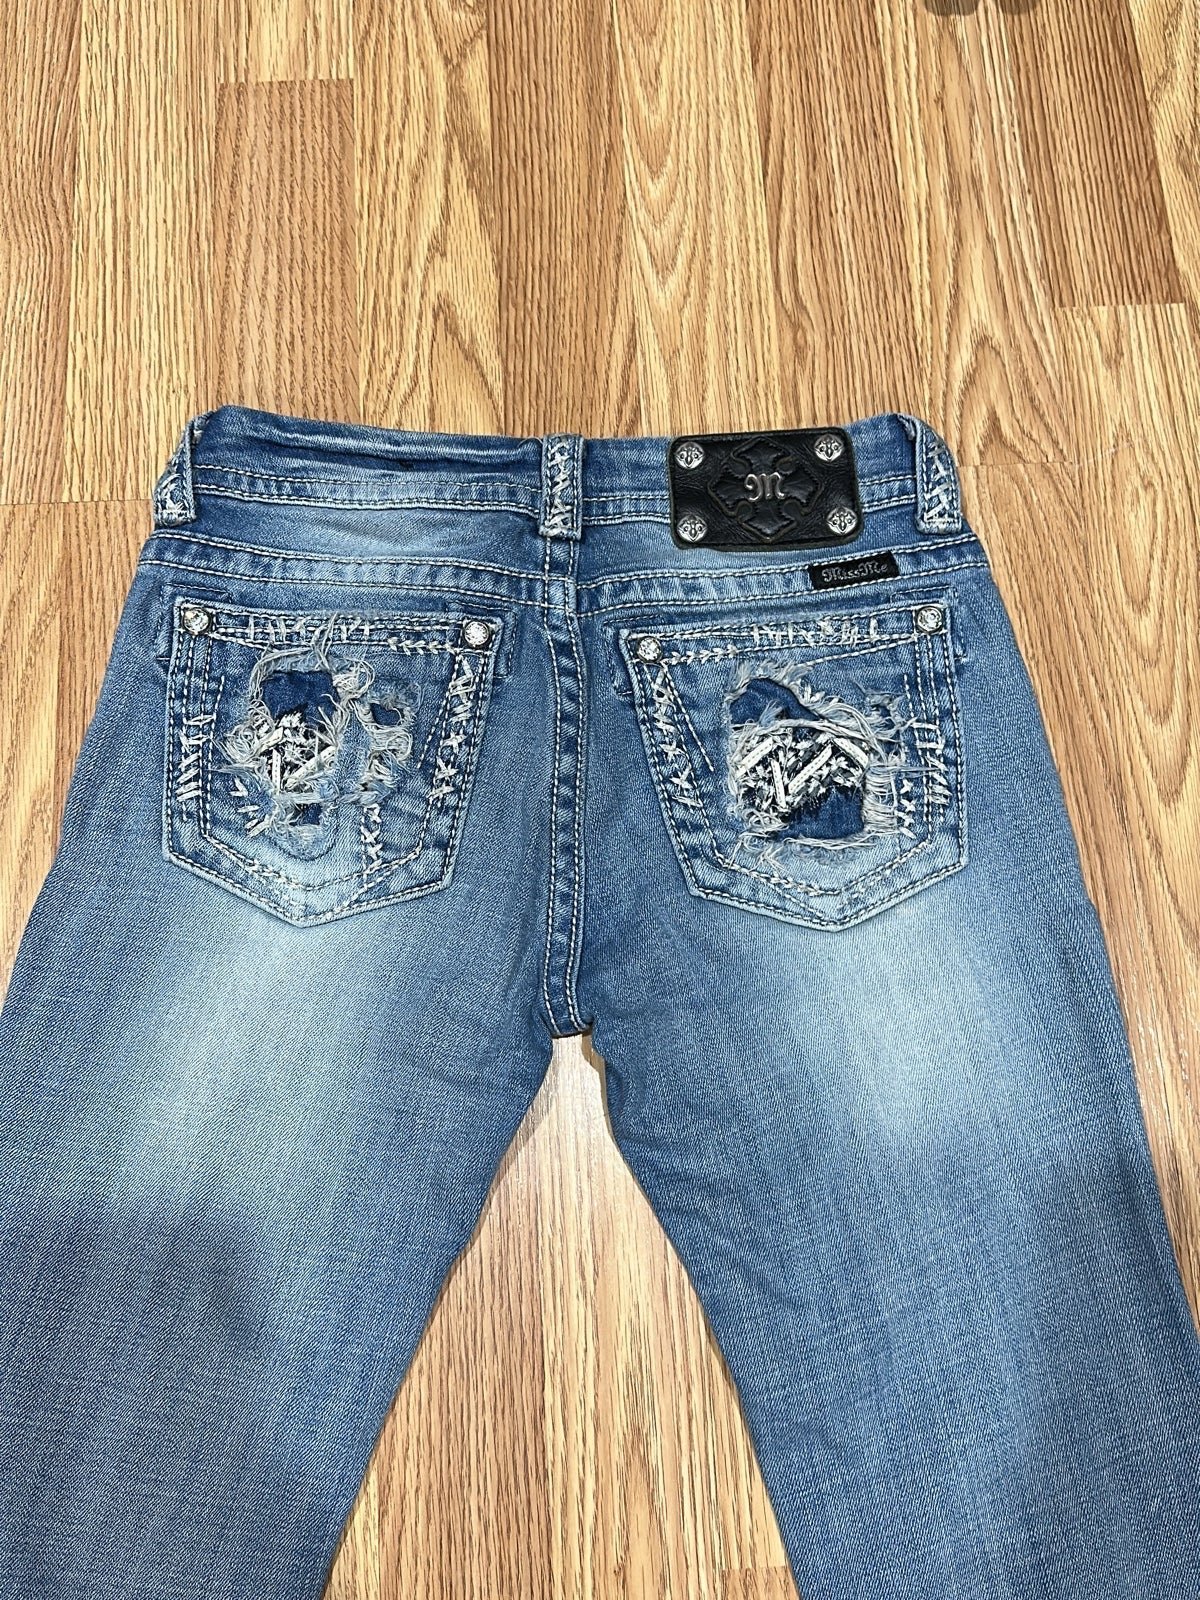 Elegant Miss Me Bootcut Jeans Size 26x 33 HUKgrxB9b online store